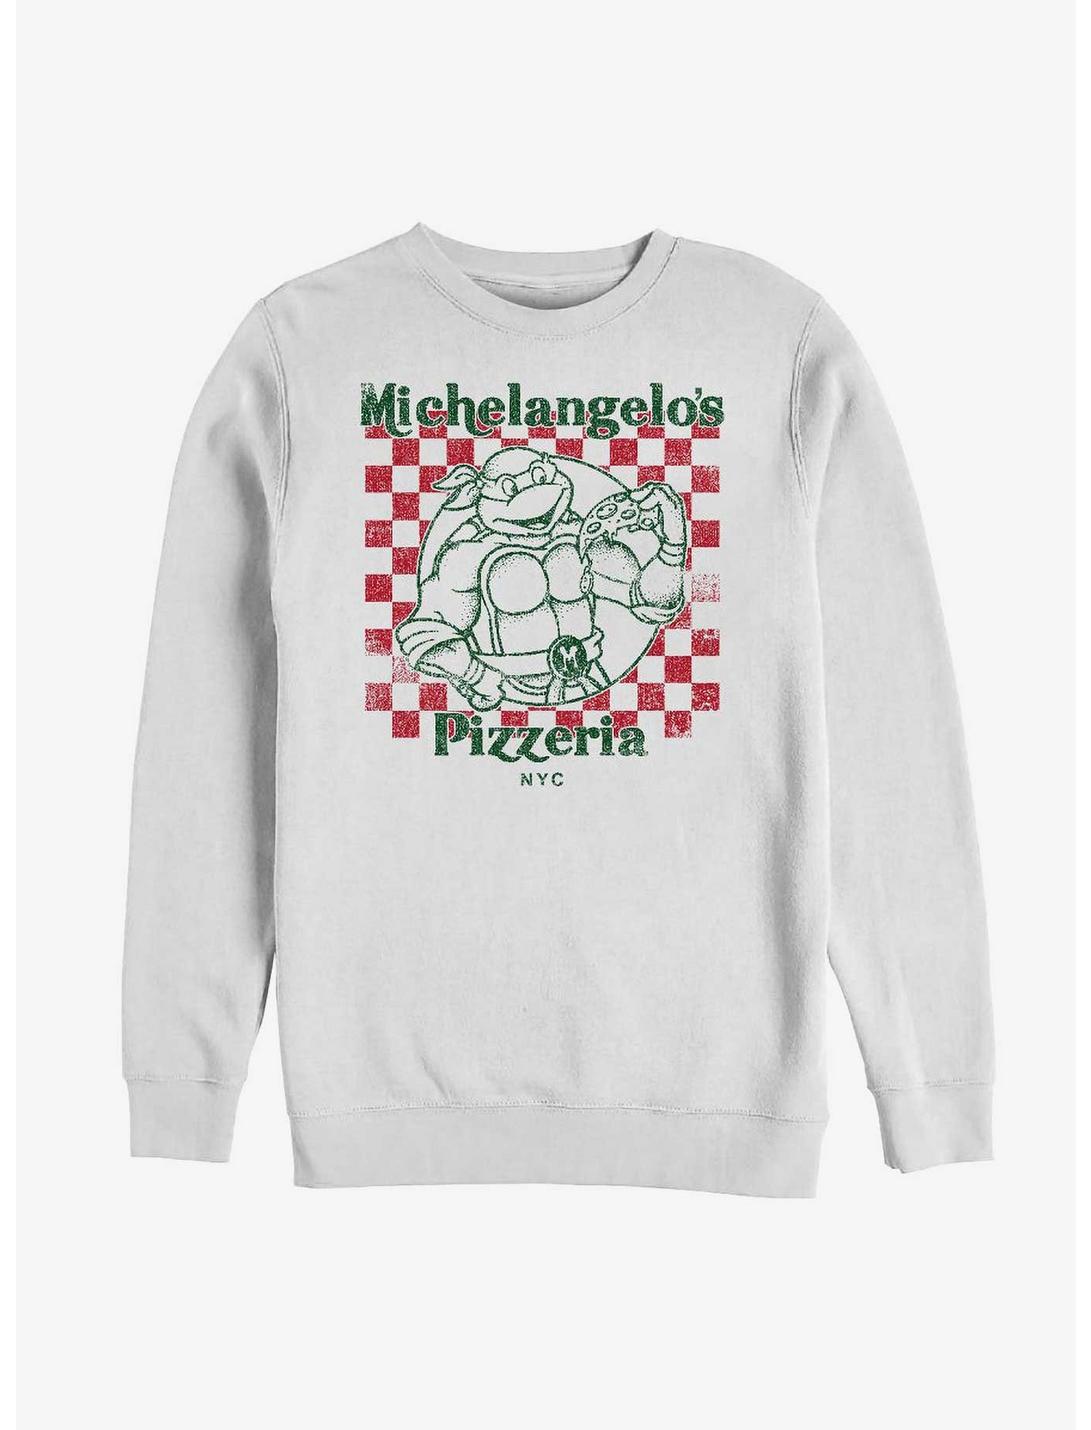 Teenage Mutant Ninja Turtles Mikey's Pizza Sweatshirt, WHITE, hi-res